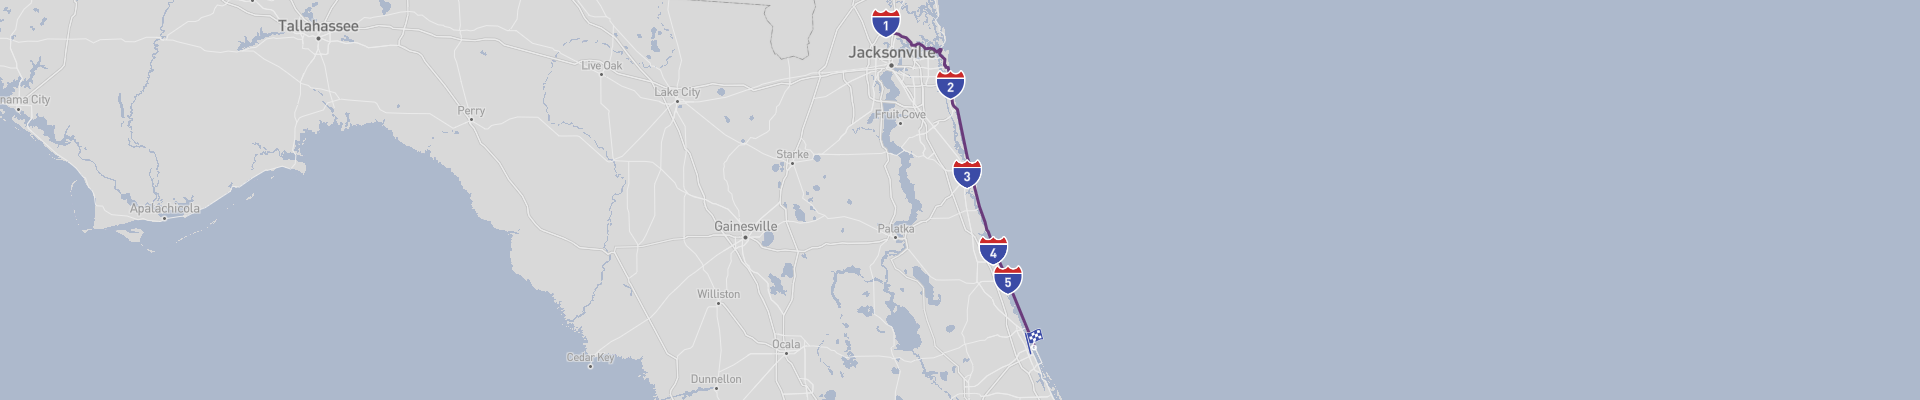 Itinéraire Florida A1A 